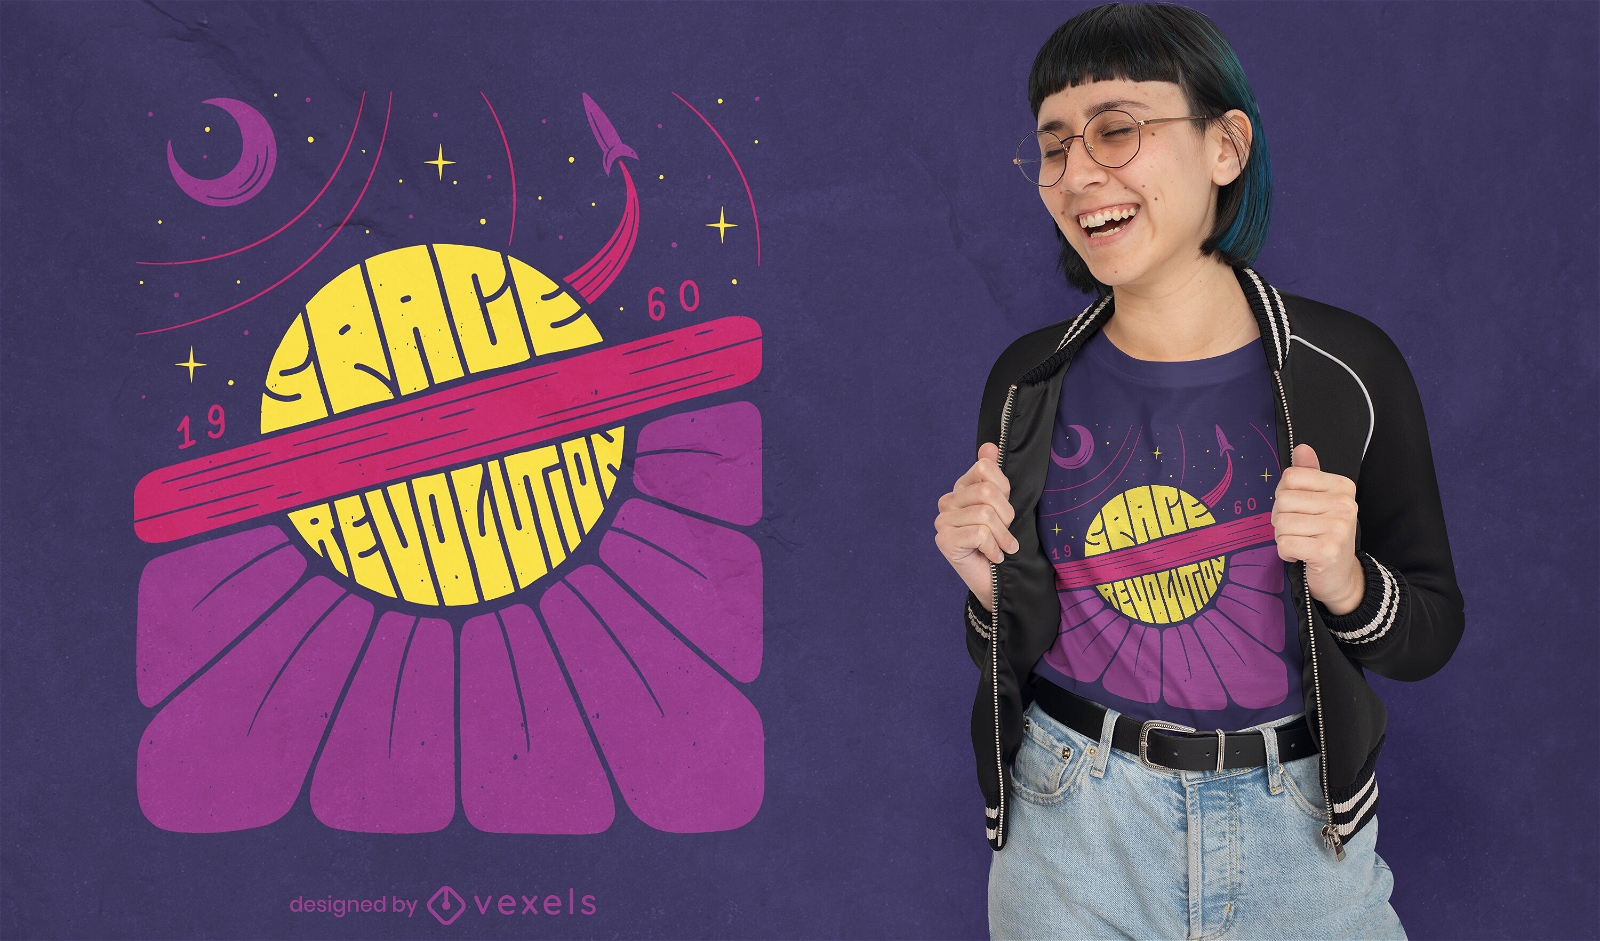 60's Space revolution Saturn t-shirt design